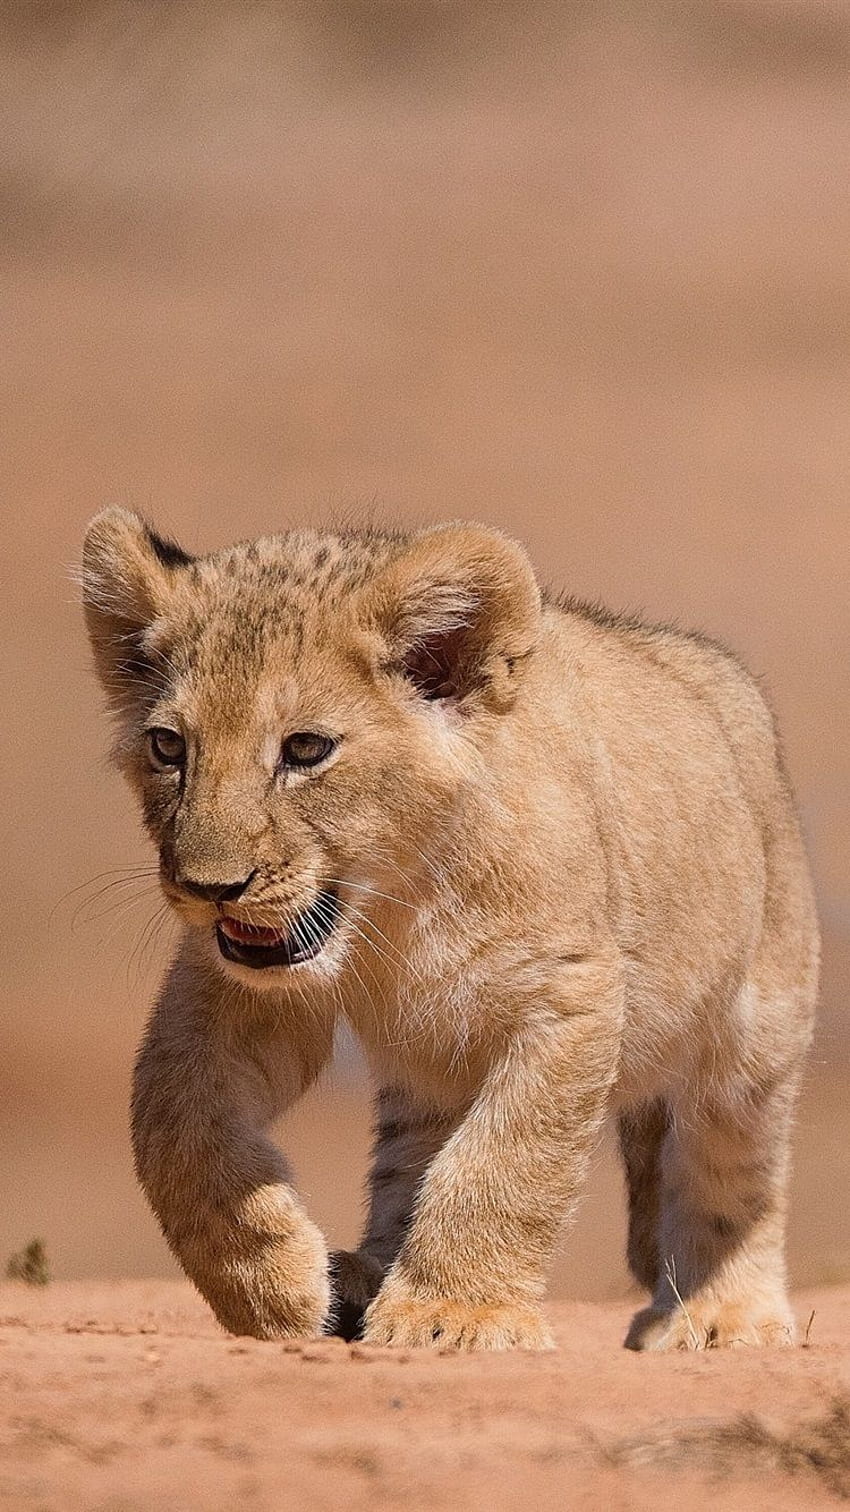 Cute Lion Cub Animal HD Wallpaper  HD Wallpapers